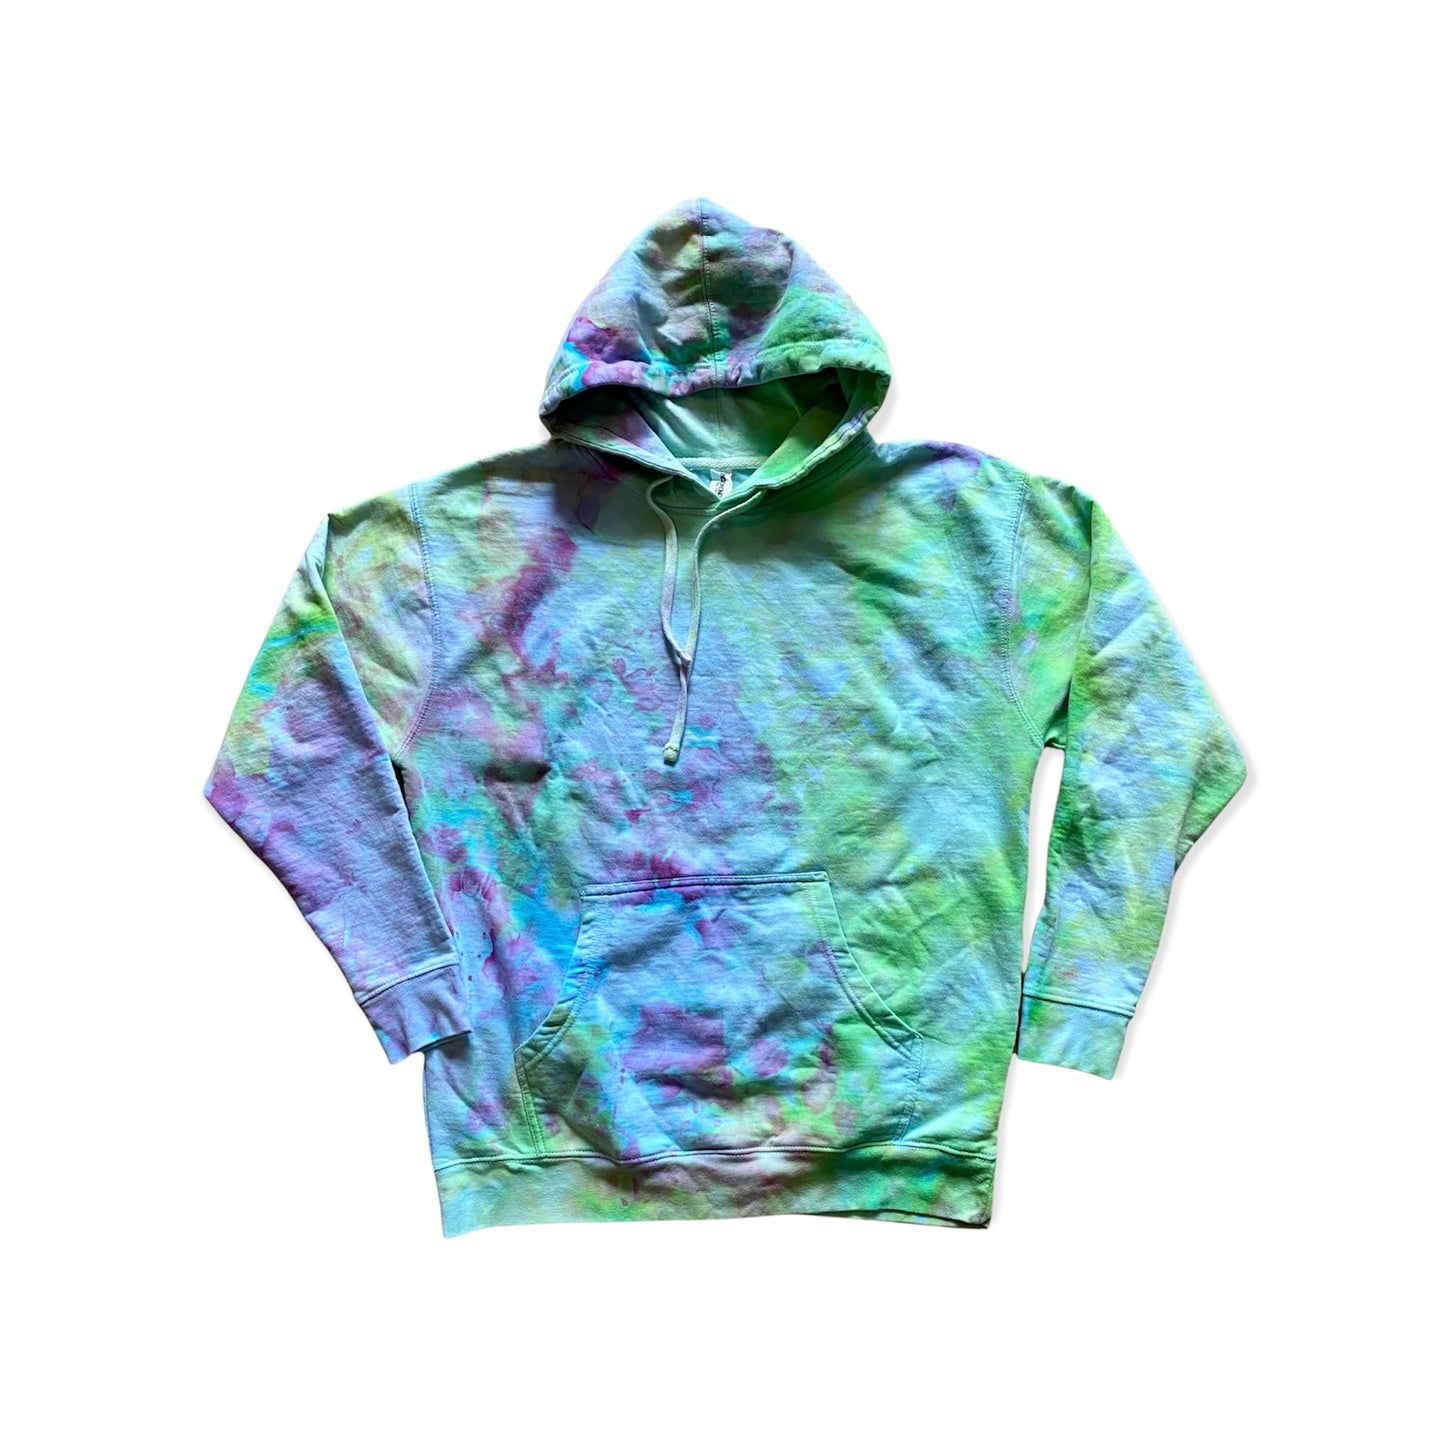 (Market) Scrunch Ice Dyed Hoodie Sweatshirt